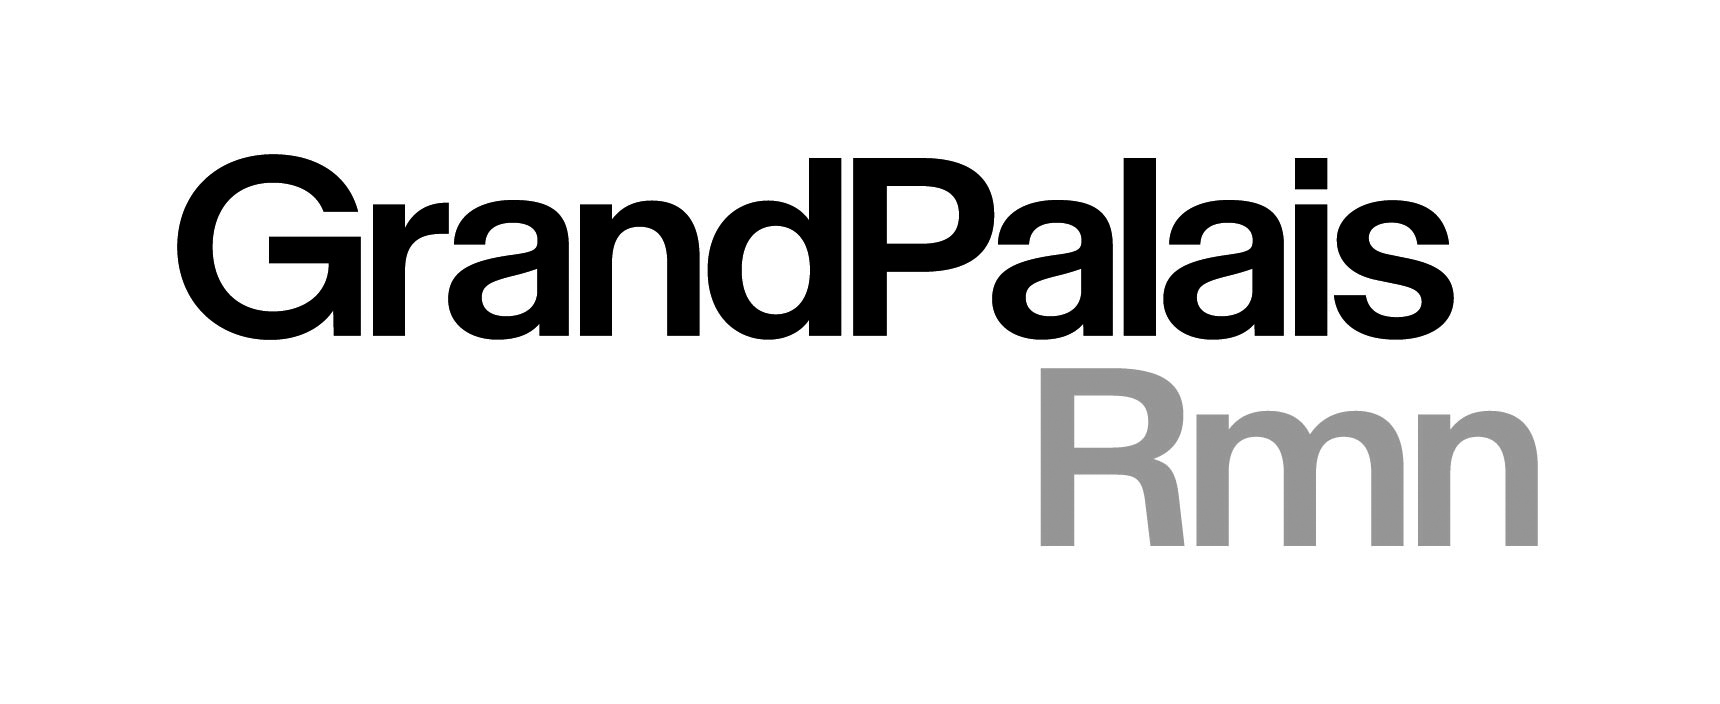 Logo GrandPalaisRmn